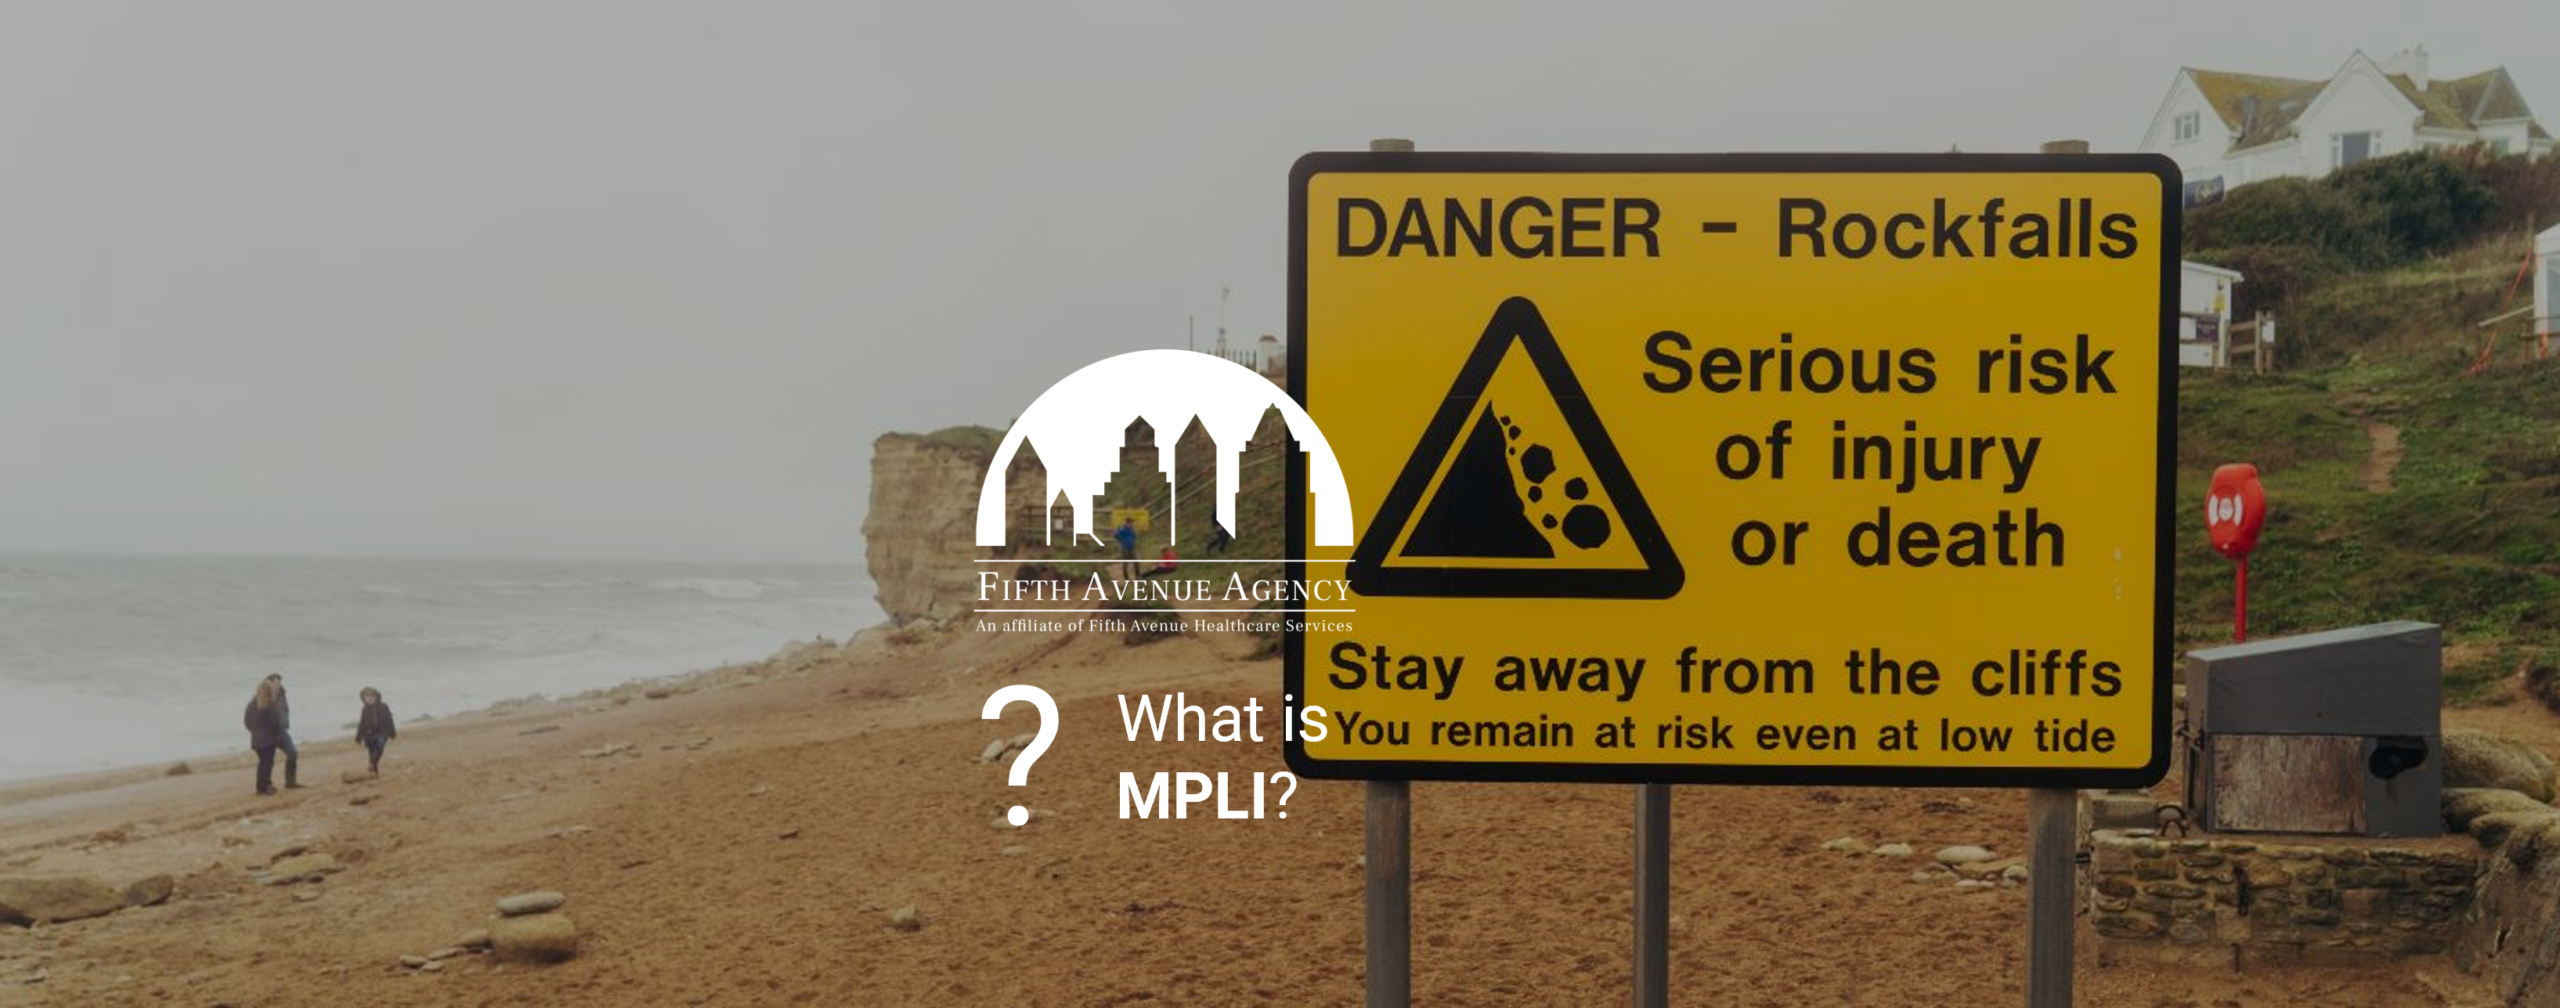 MPLI Medical Professional Liability Insurance